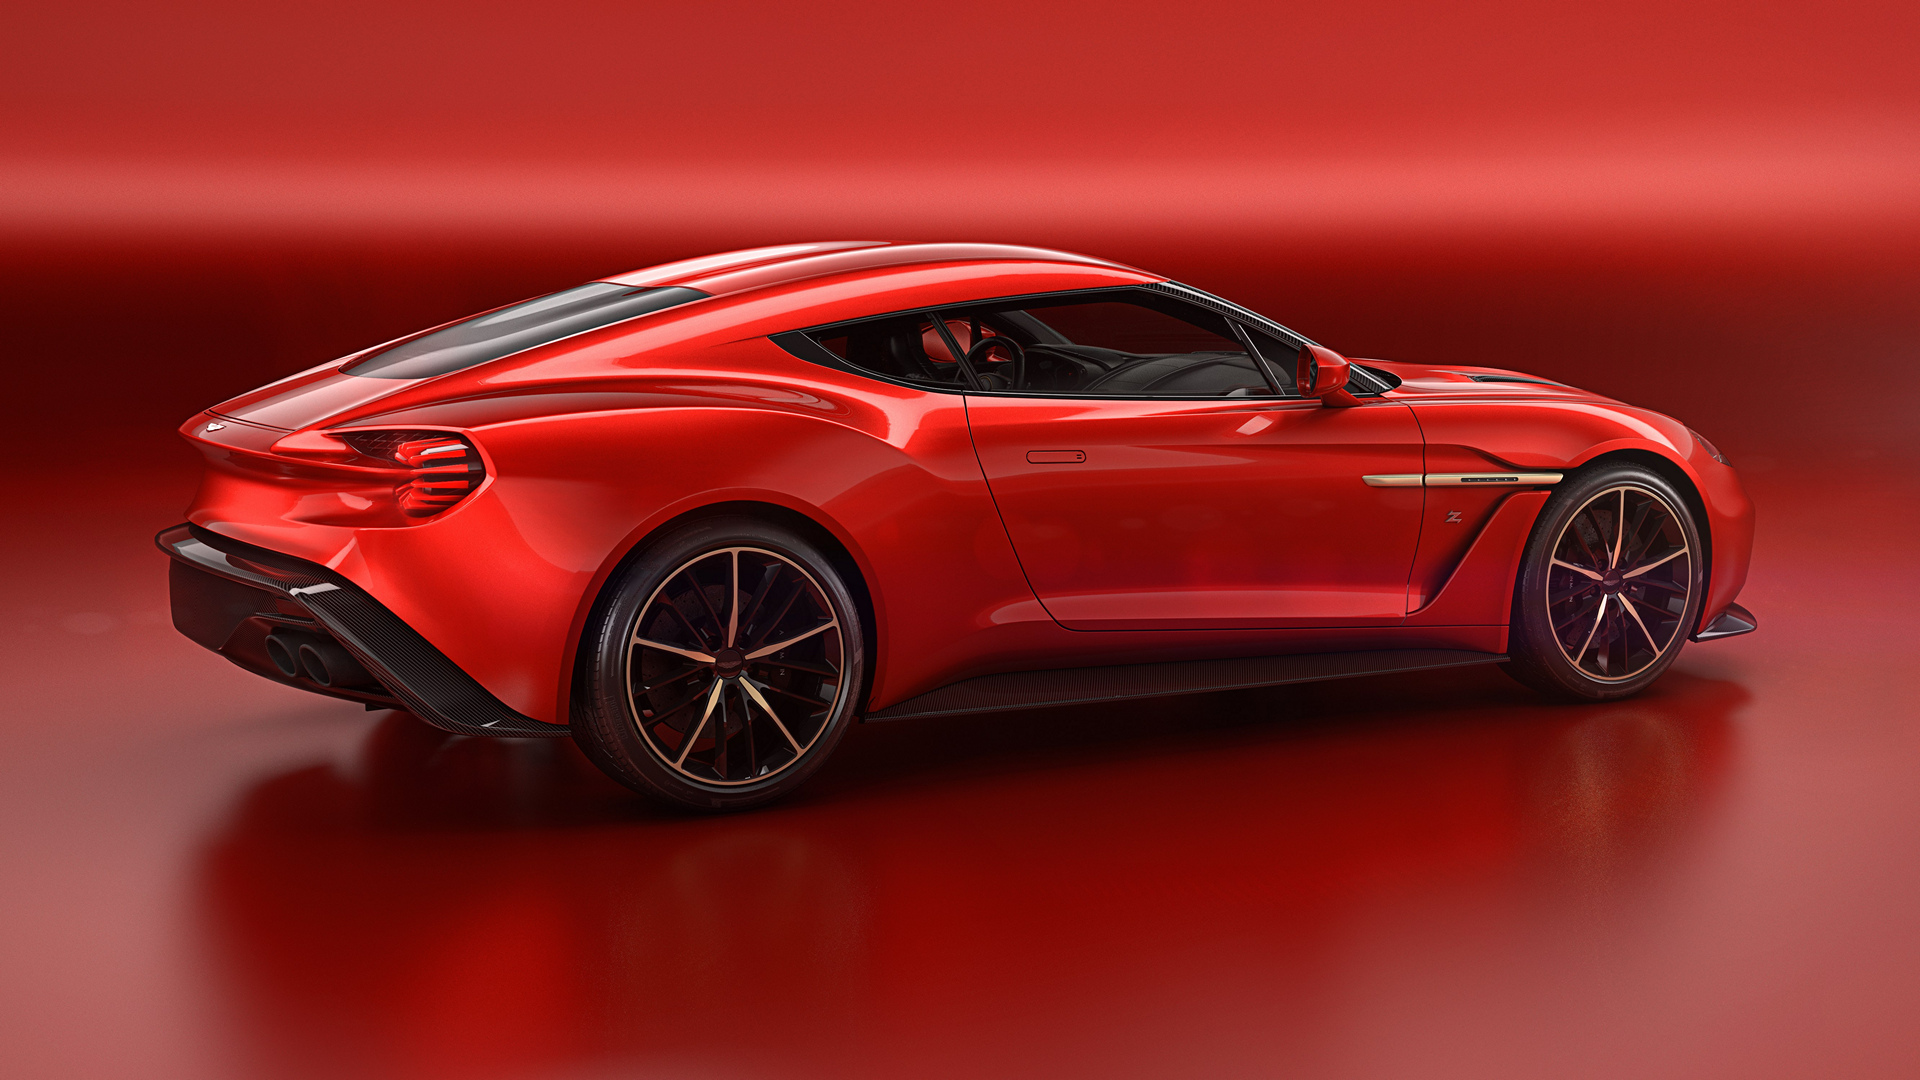 Aston Martin Vanquish Zagato Concept © Aston Martin Lagonda Limited